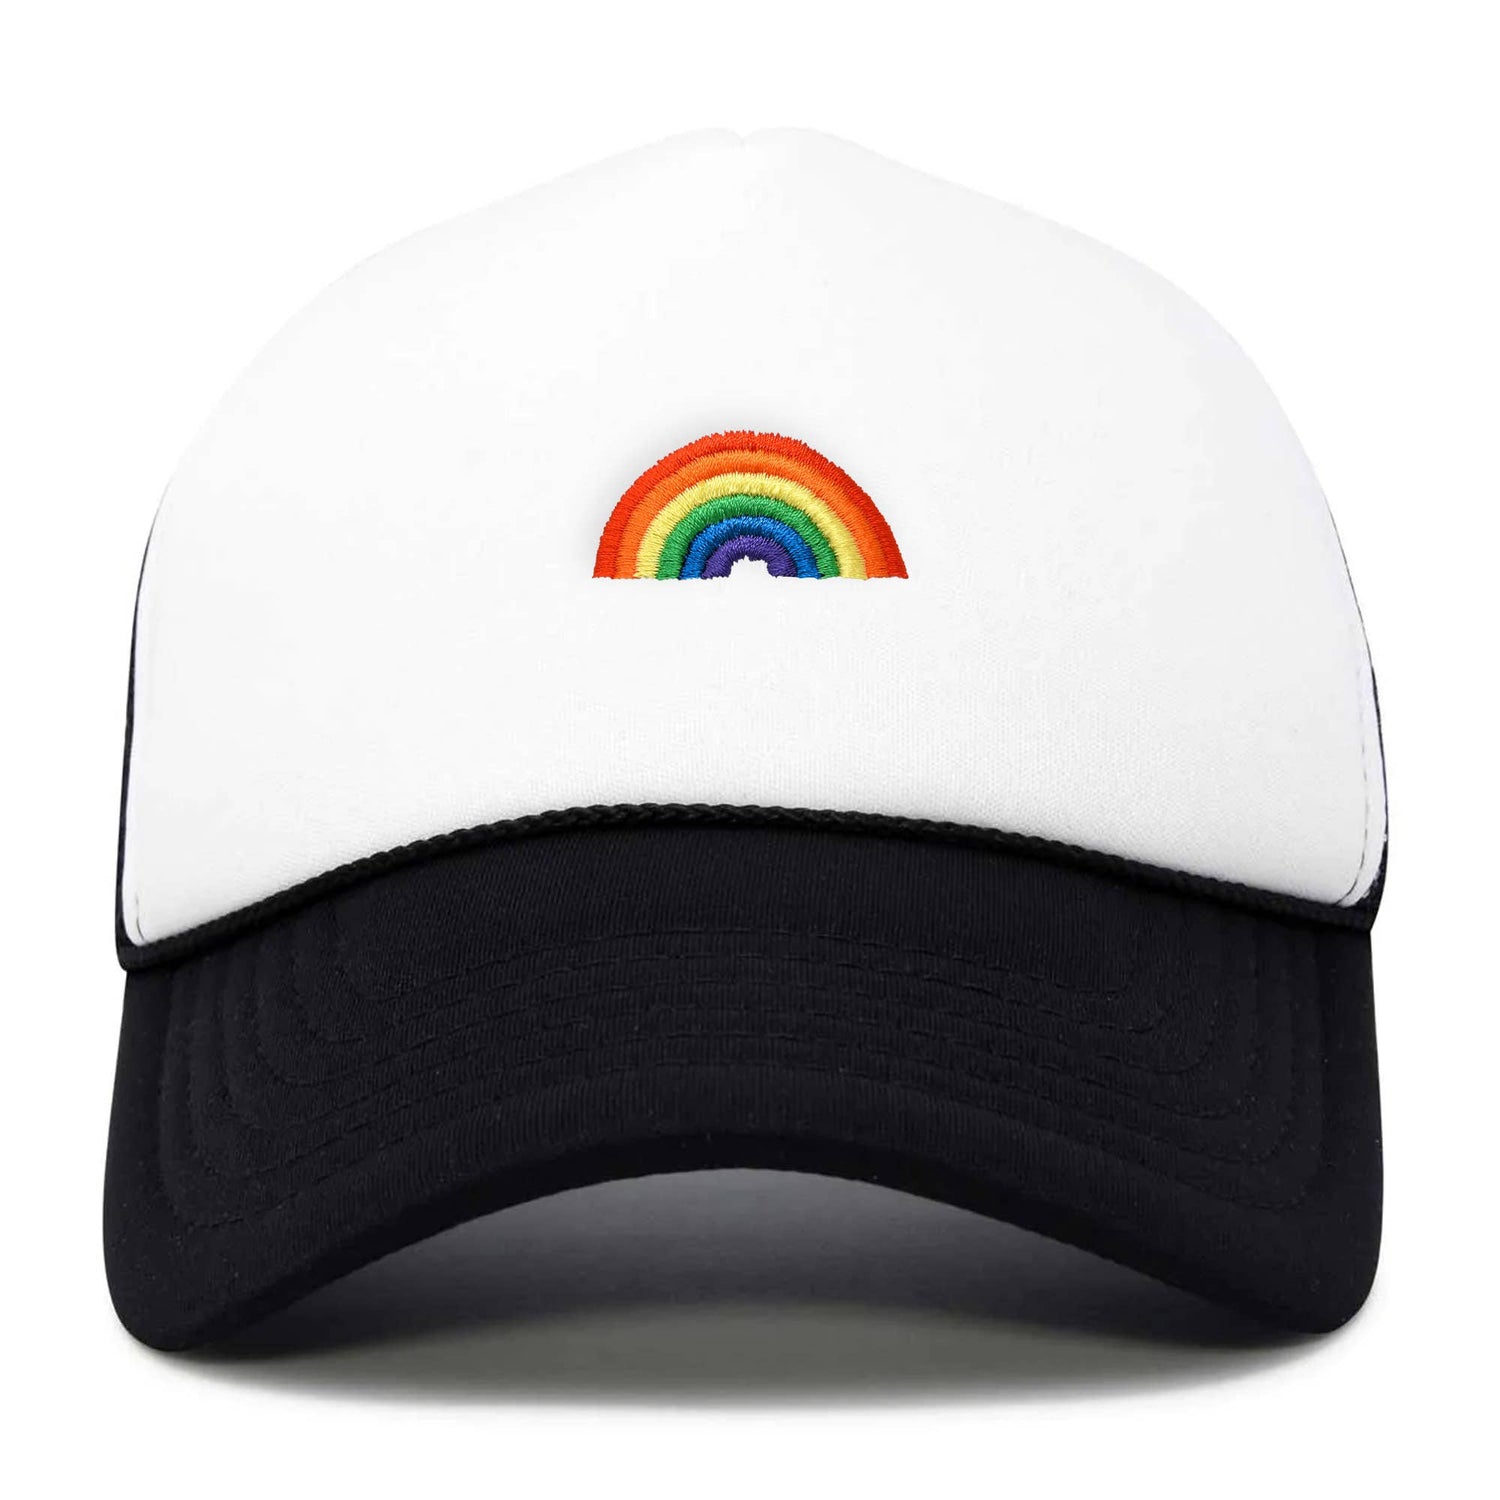 Rainbow Trucker Hat - Black and White